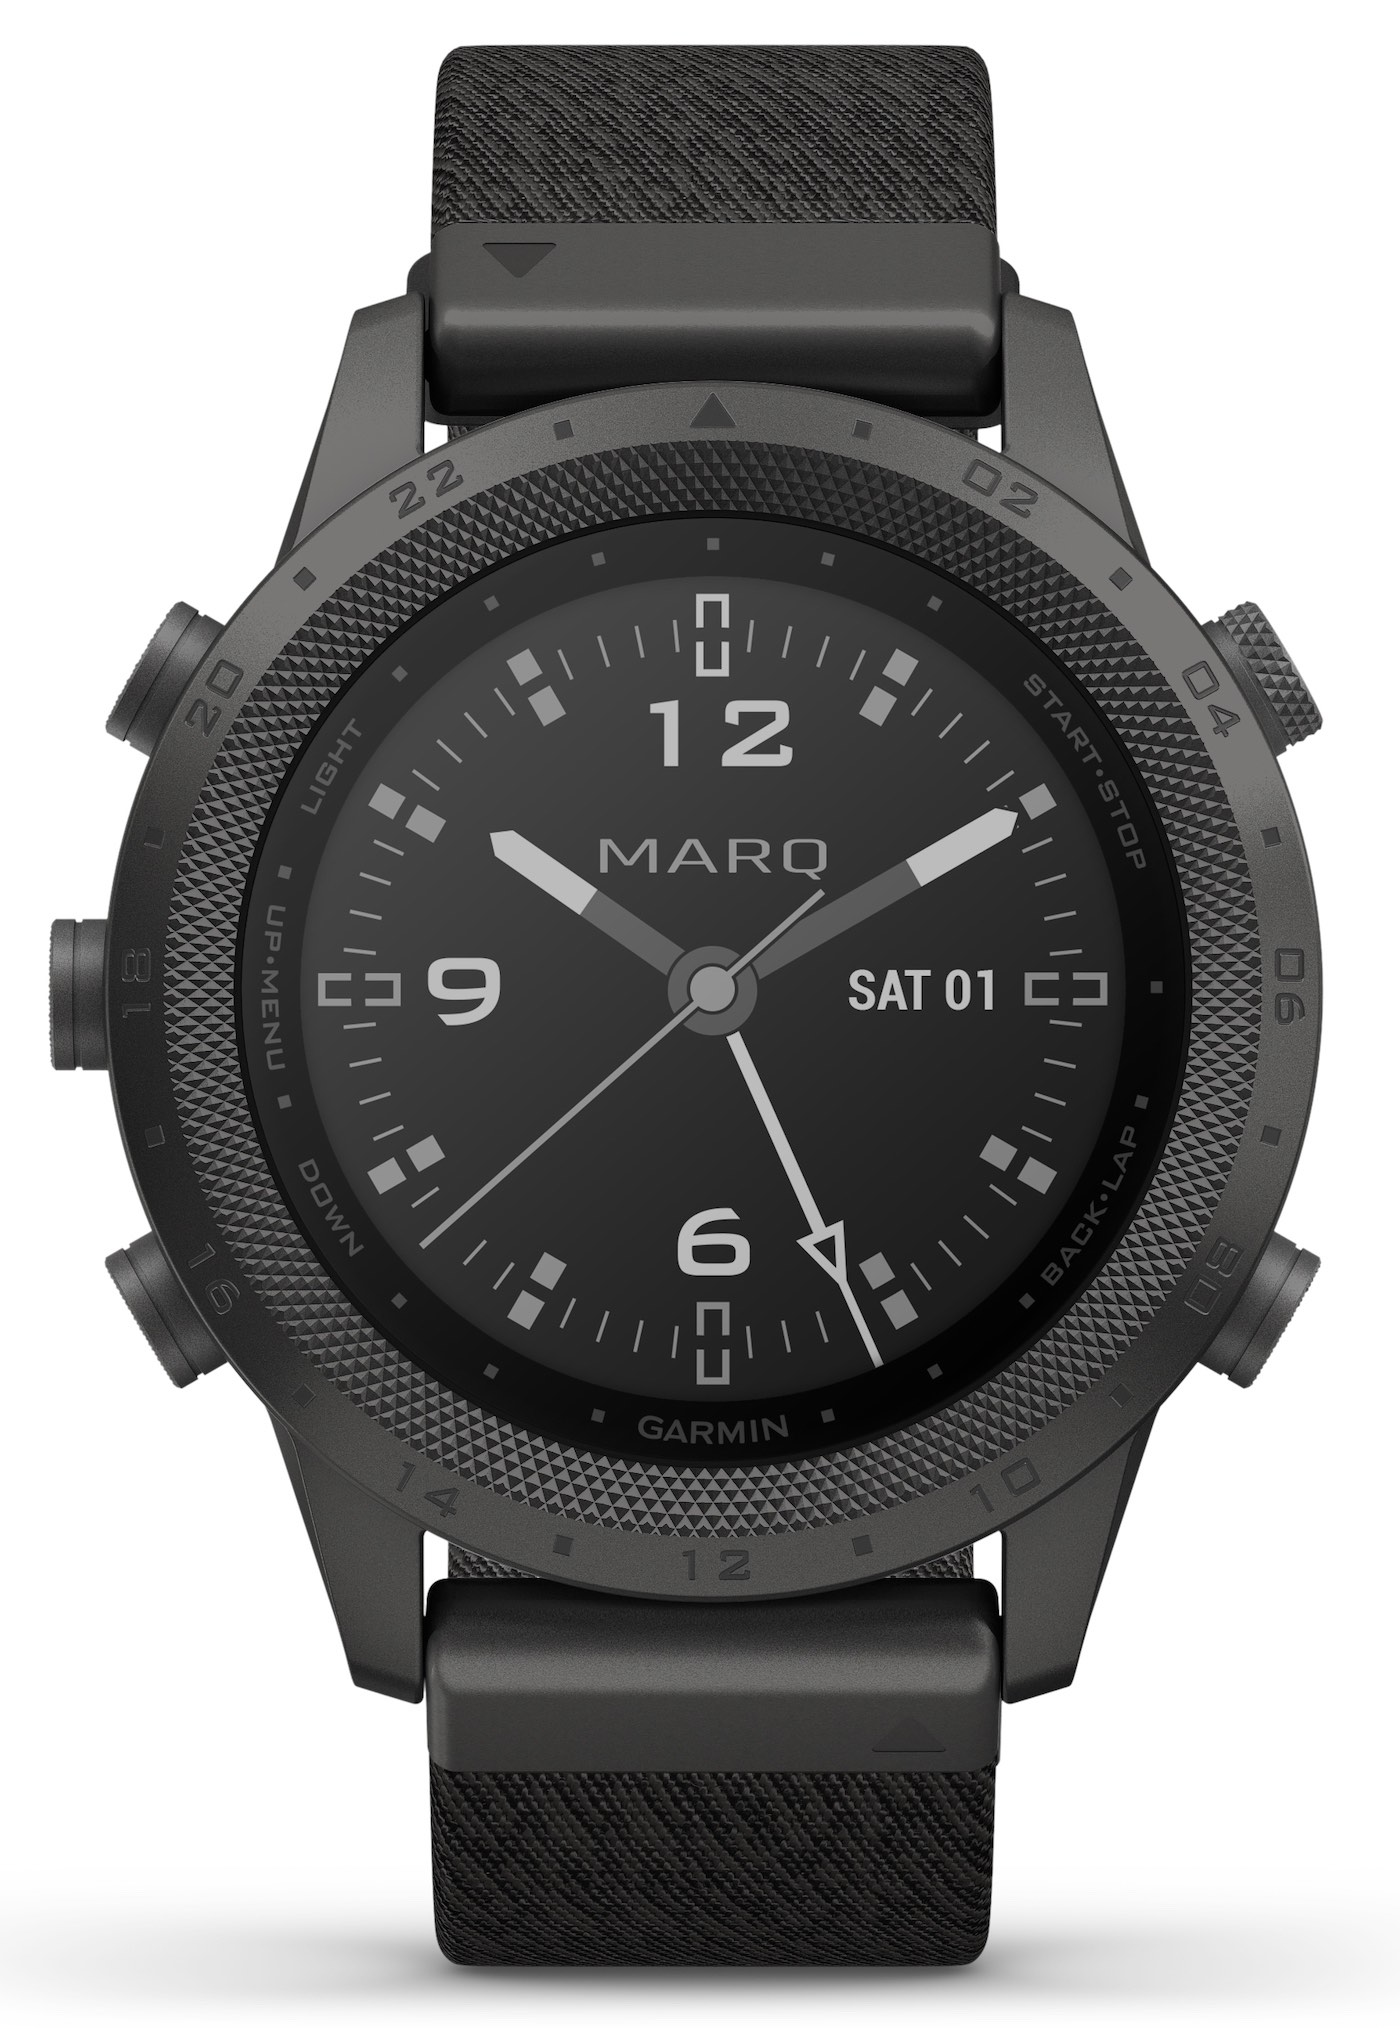 Garmin MARQ Commander Smartwatch Includes Data Wipe Button For Maximum | aBlogtoWatch